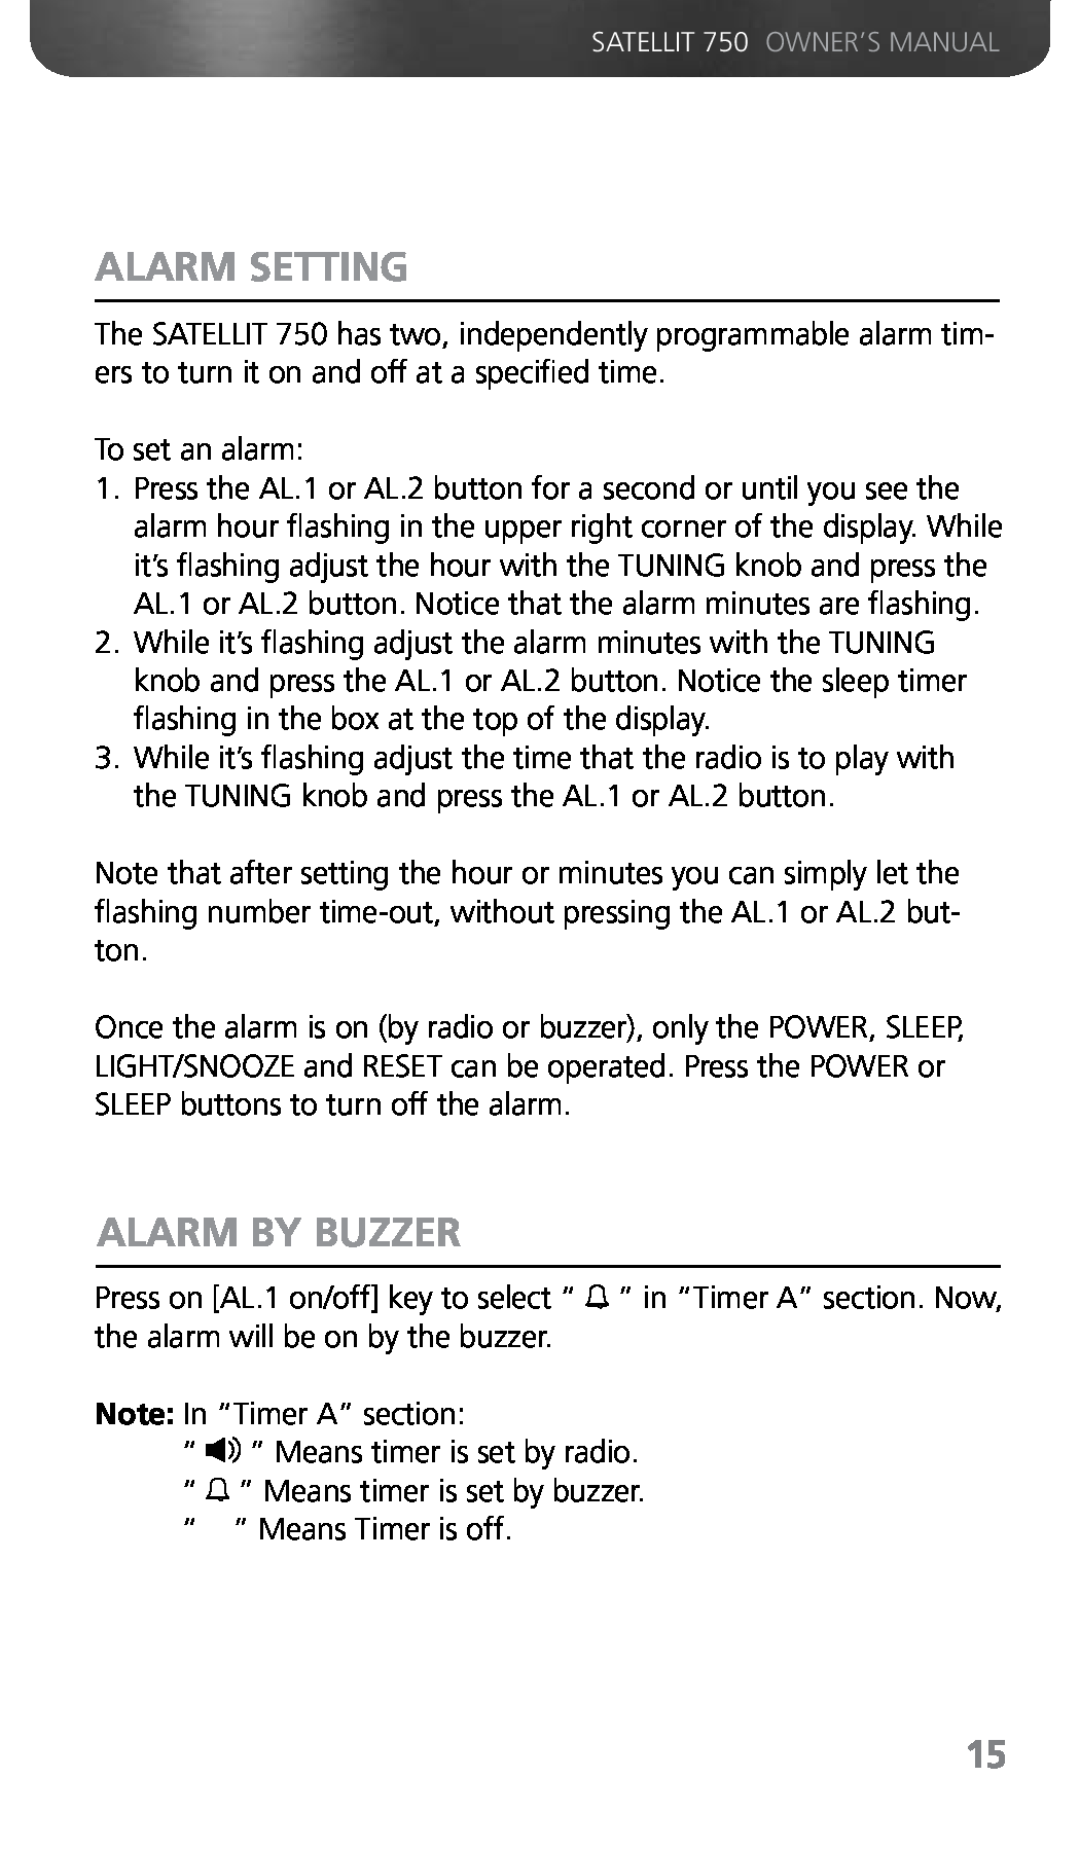 Grundig 750 owner manual Alarm Setting, Alarm By Buzzer 